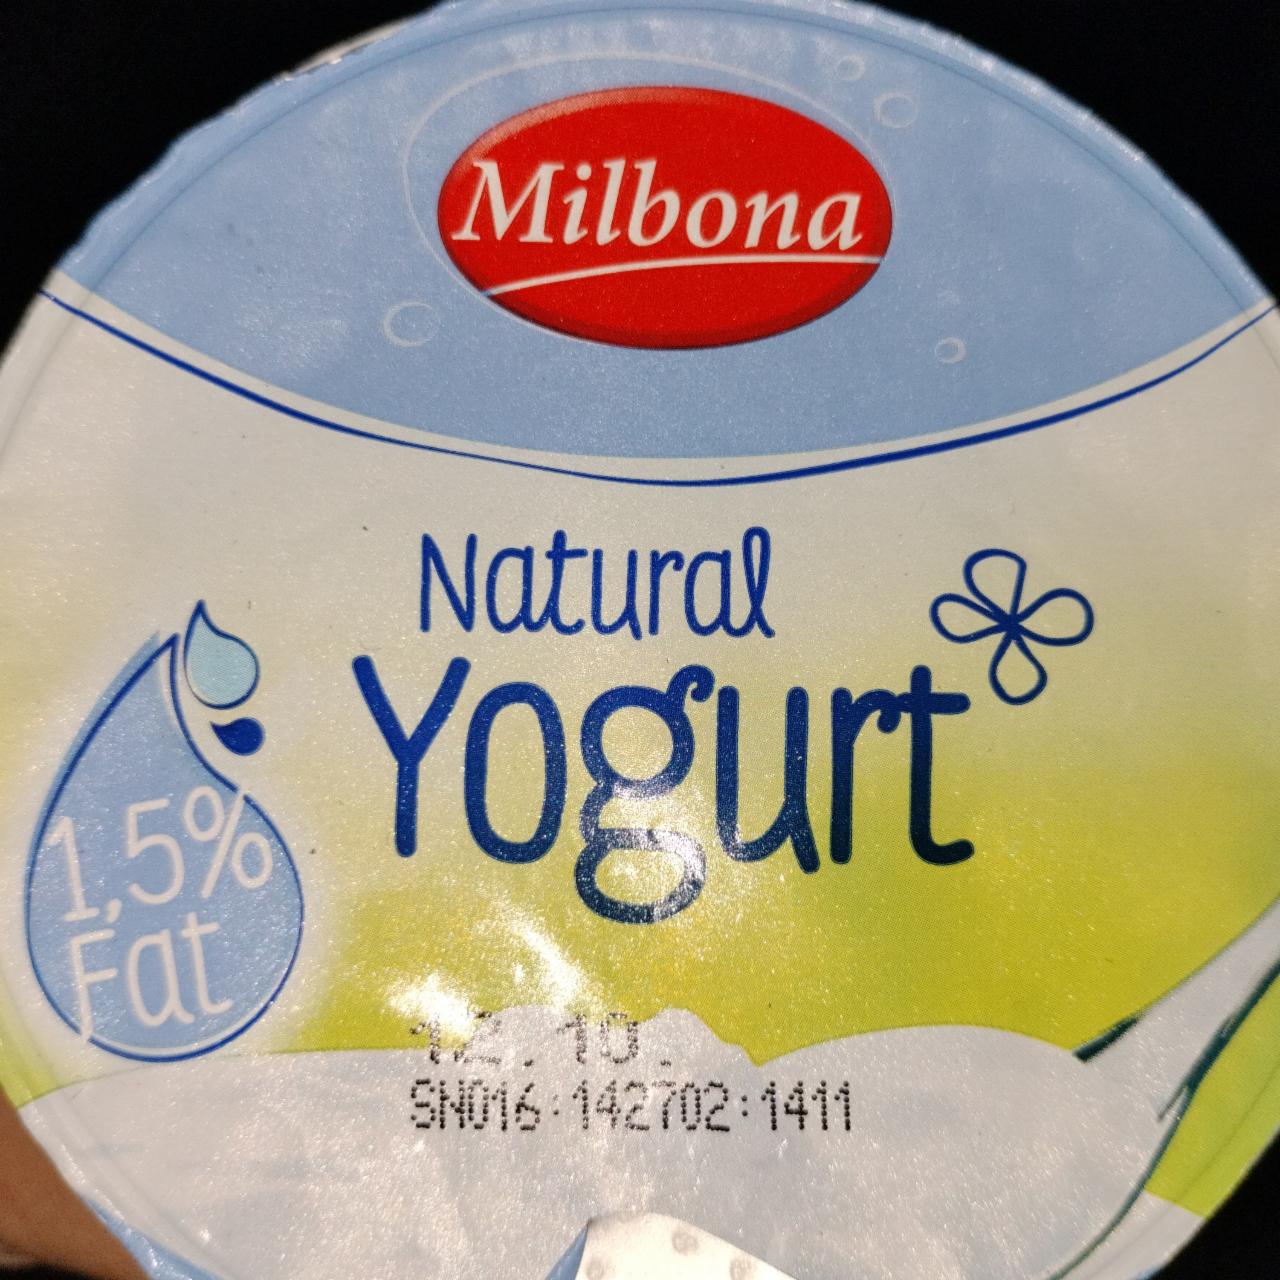 Képek - Natural yogurt 1,5% Milbona